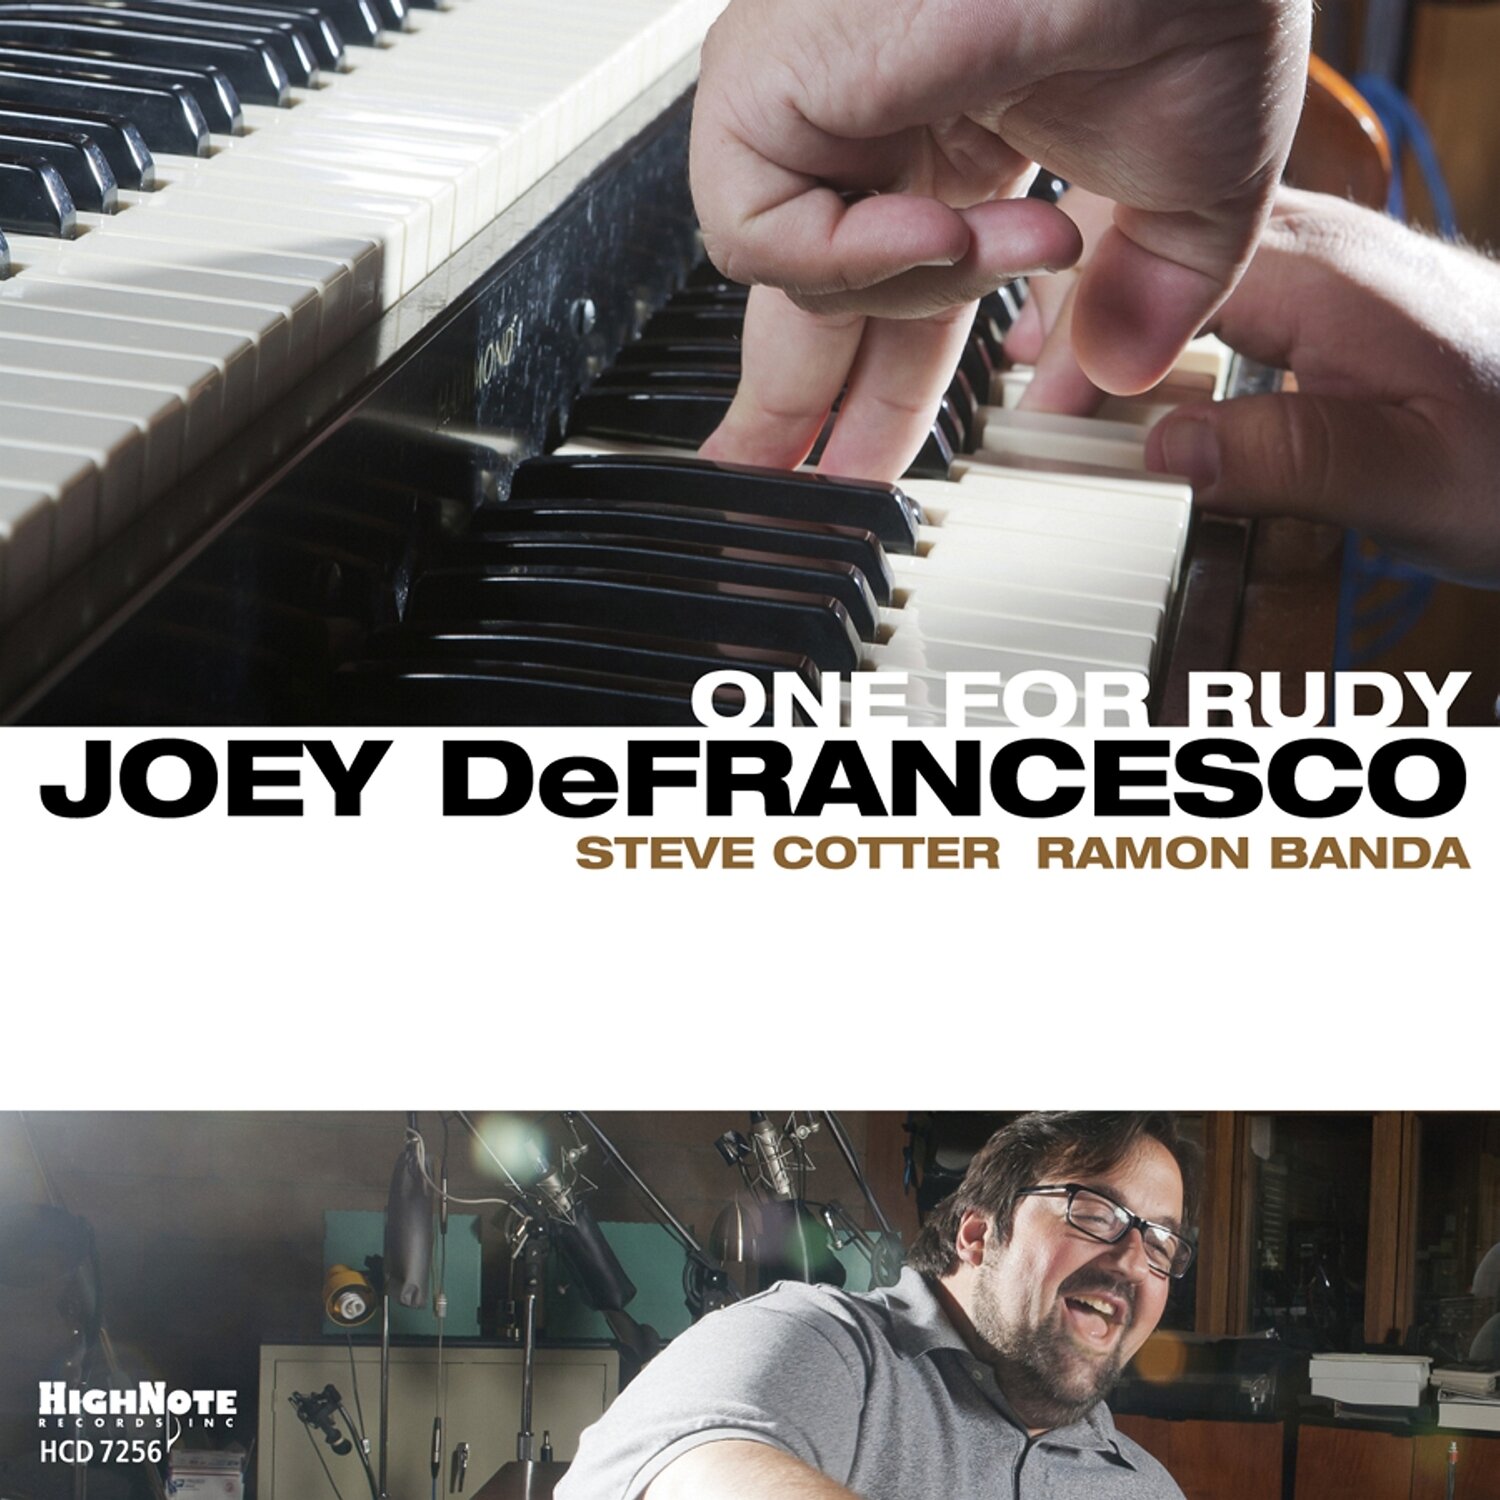 JOEY DEFRANCESCO - One For Rudy